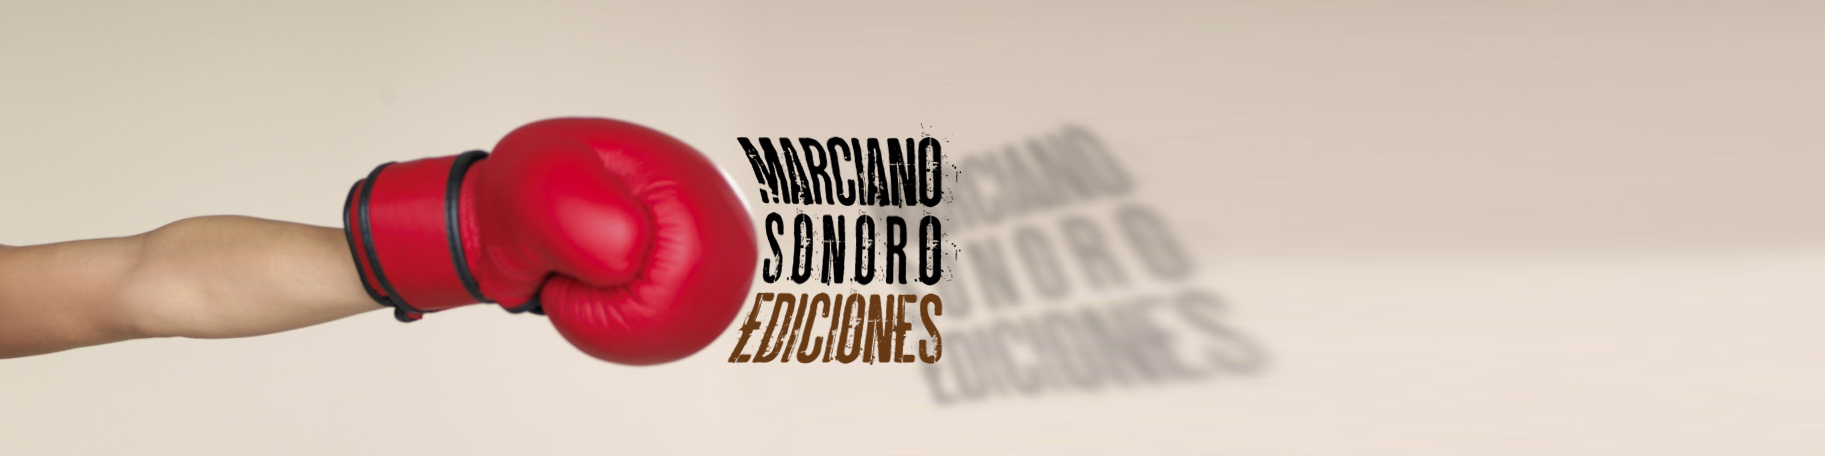 (c) Marcianosonoro.com